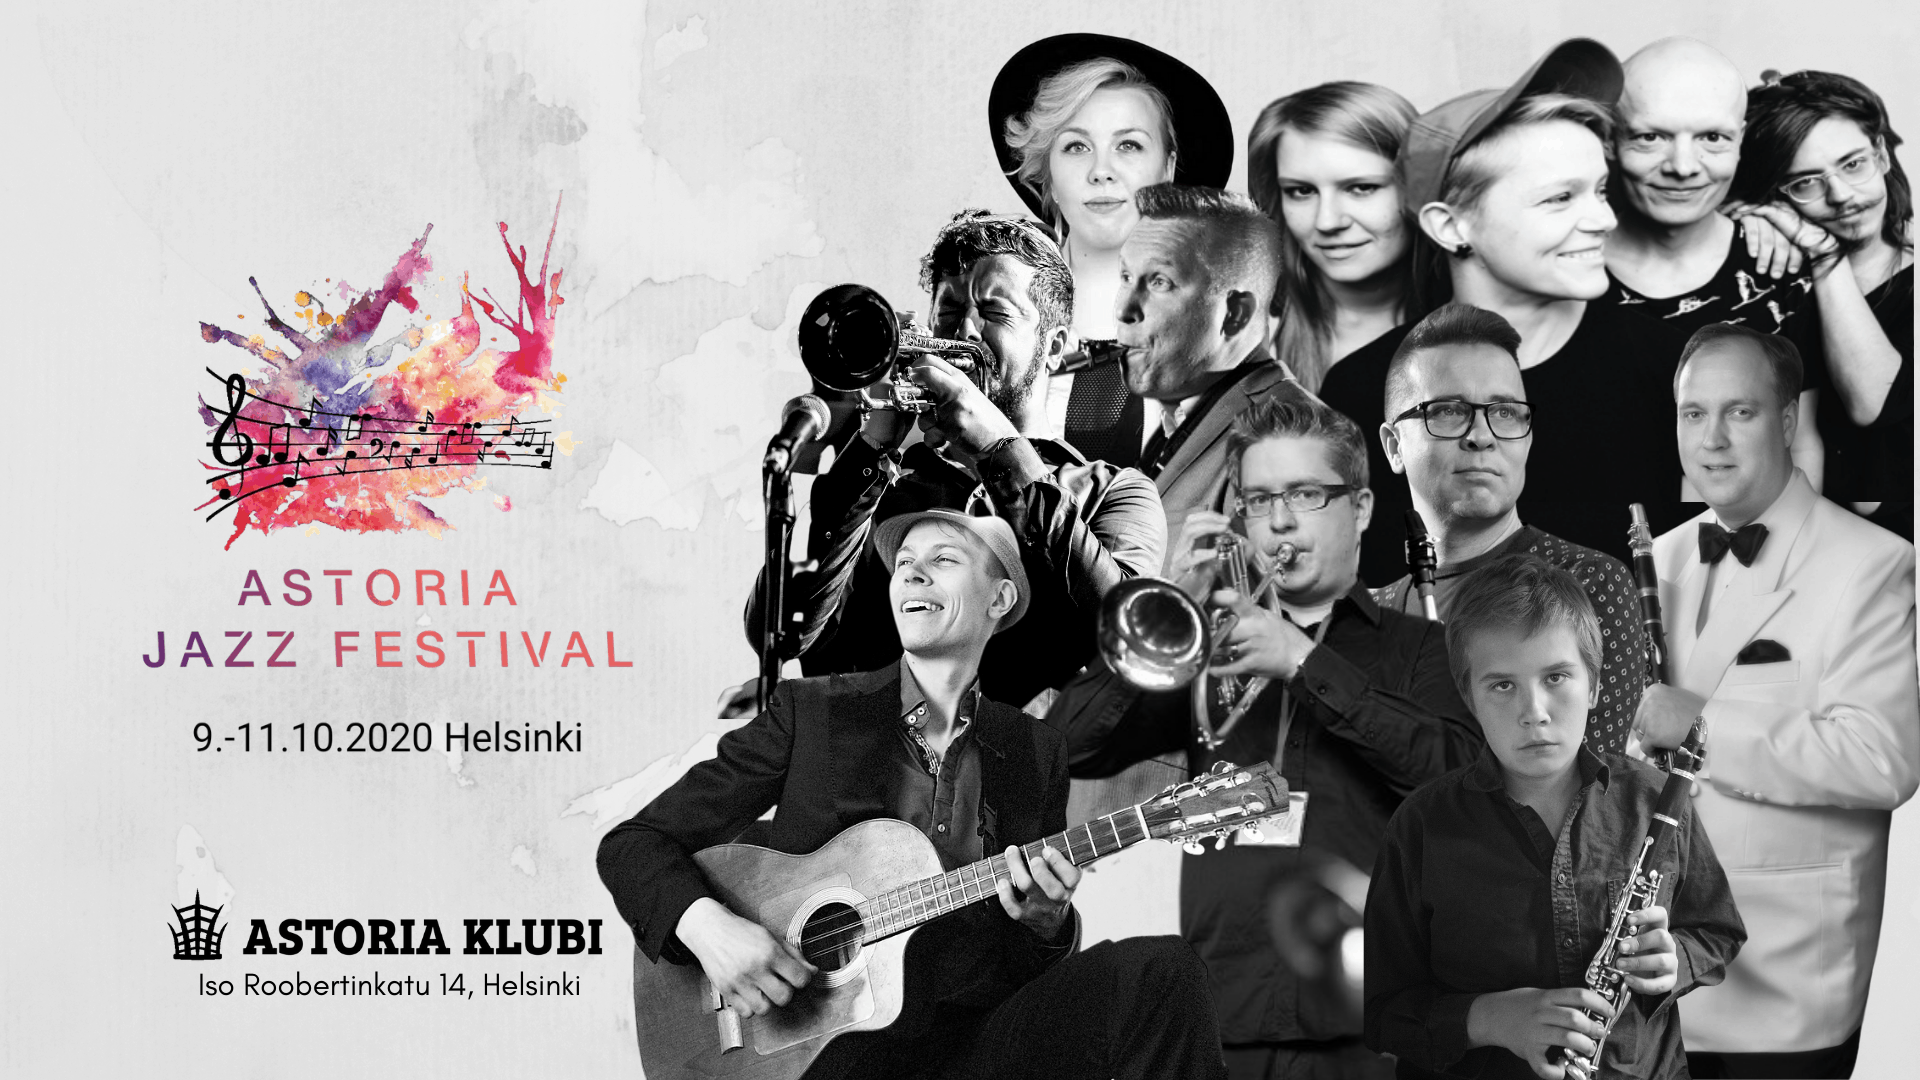 Astoria Jazz Festival 2020